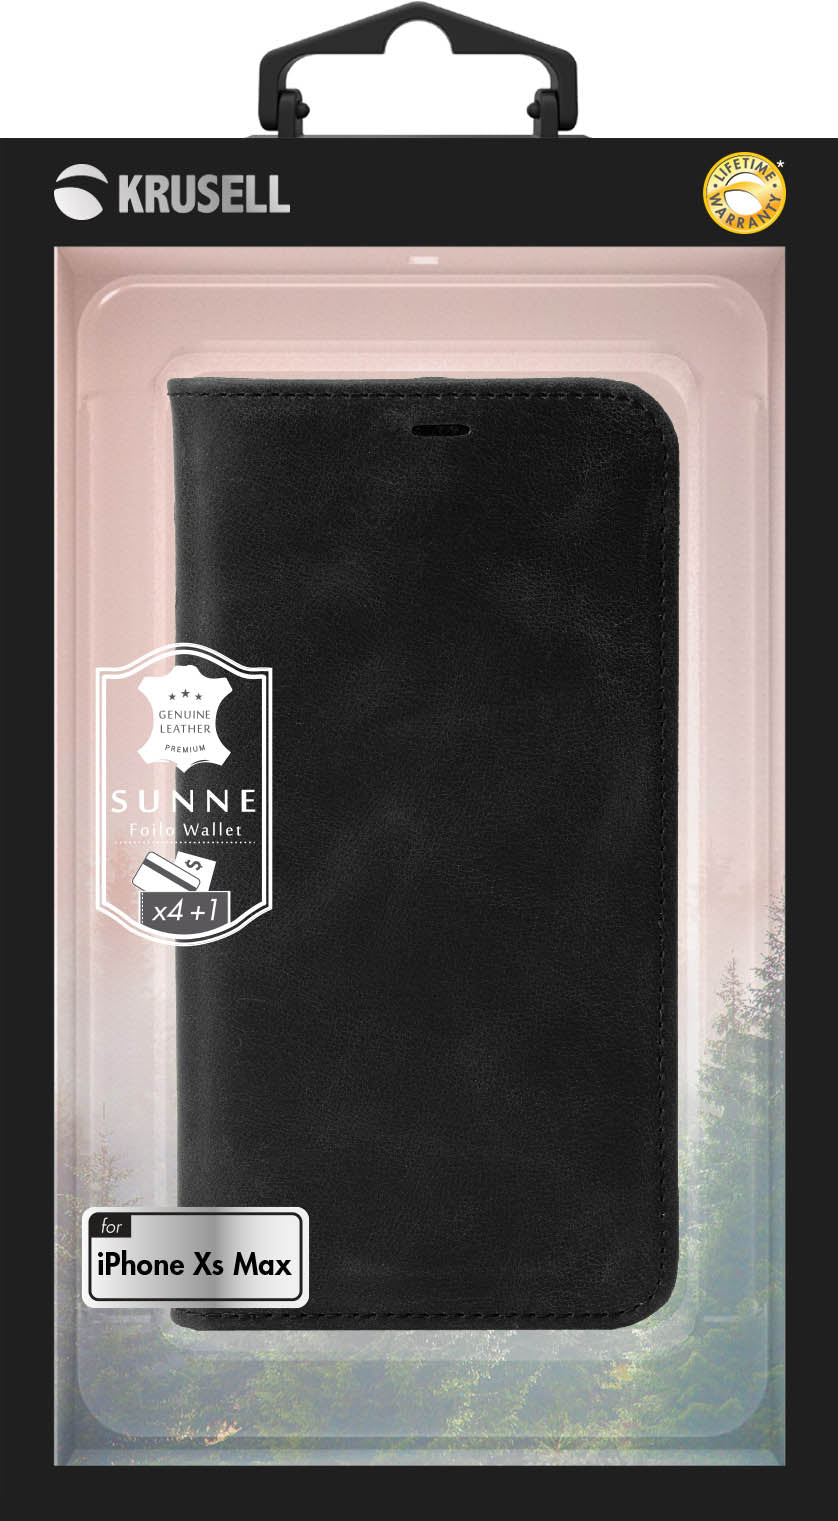 Krusell Sunne 4 Card FolioWallet Apple iPhone XS Max vintage black 